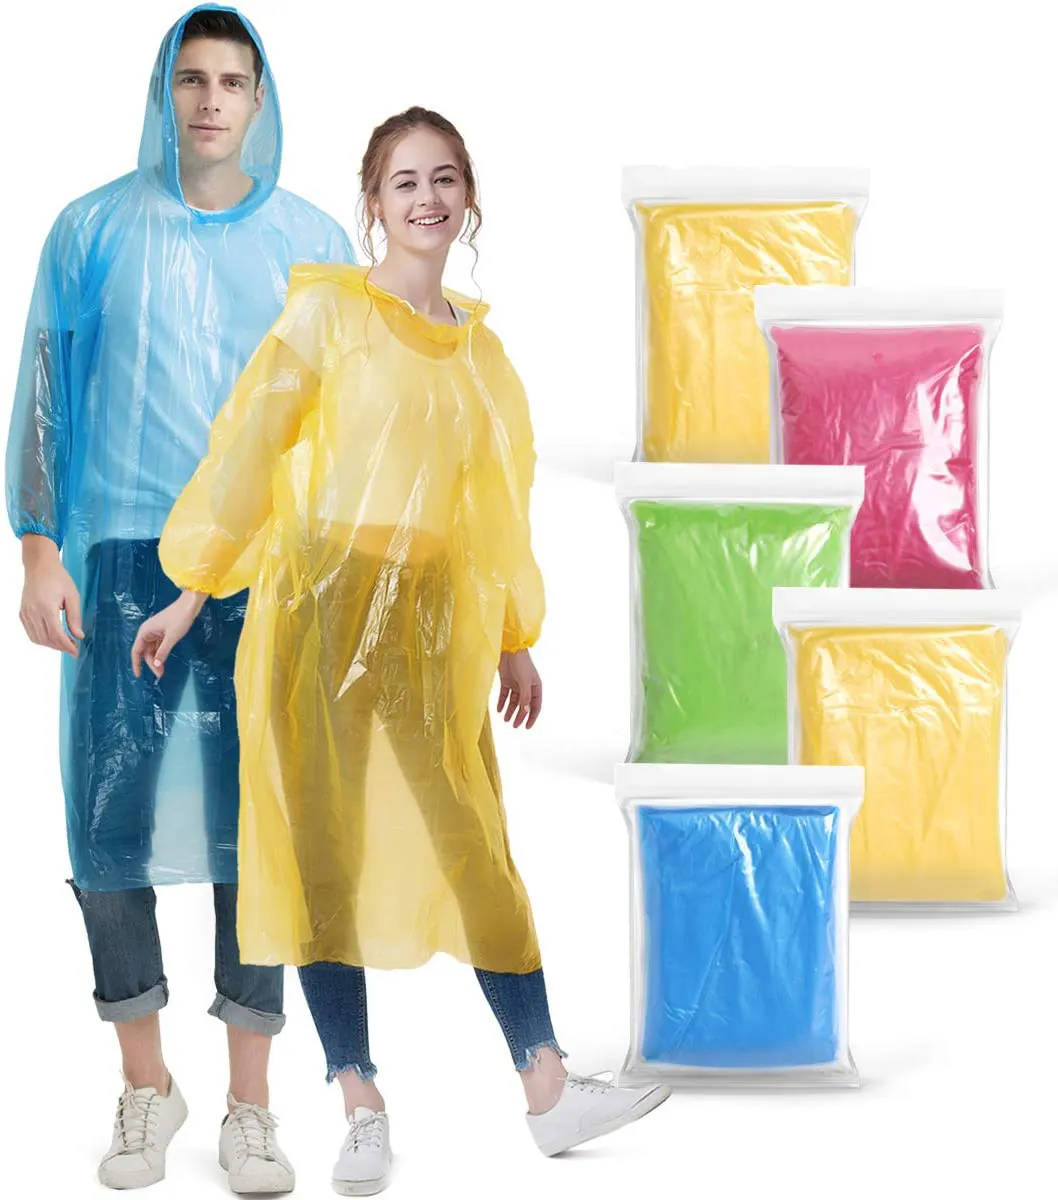 Disposable Rain Ponchos for Adults Assorted Colors travel emergency raincoat rain poncho